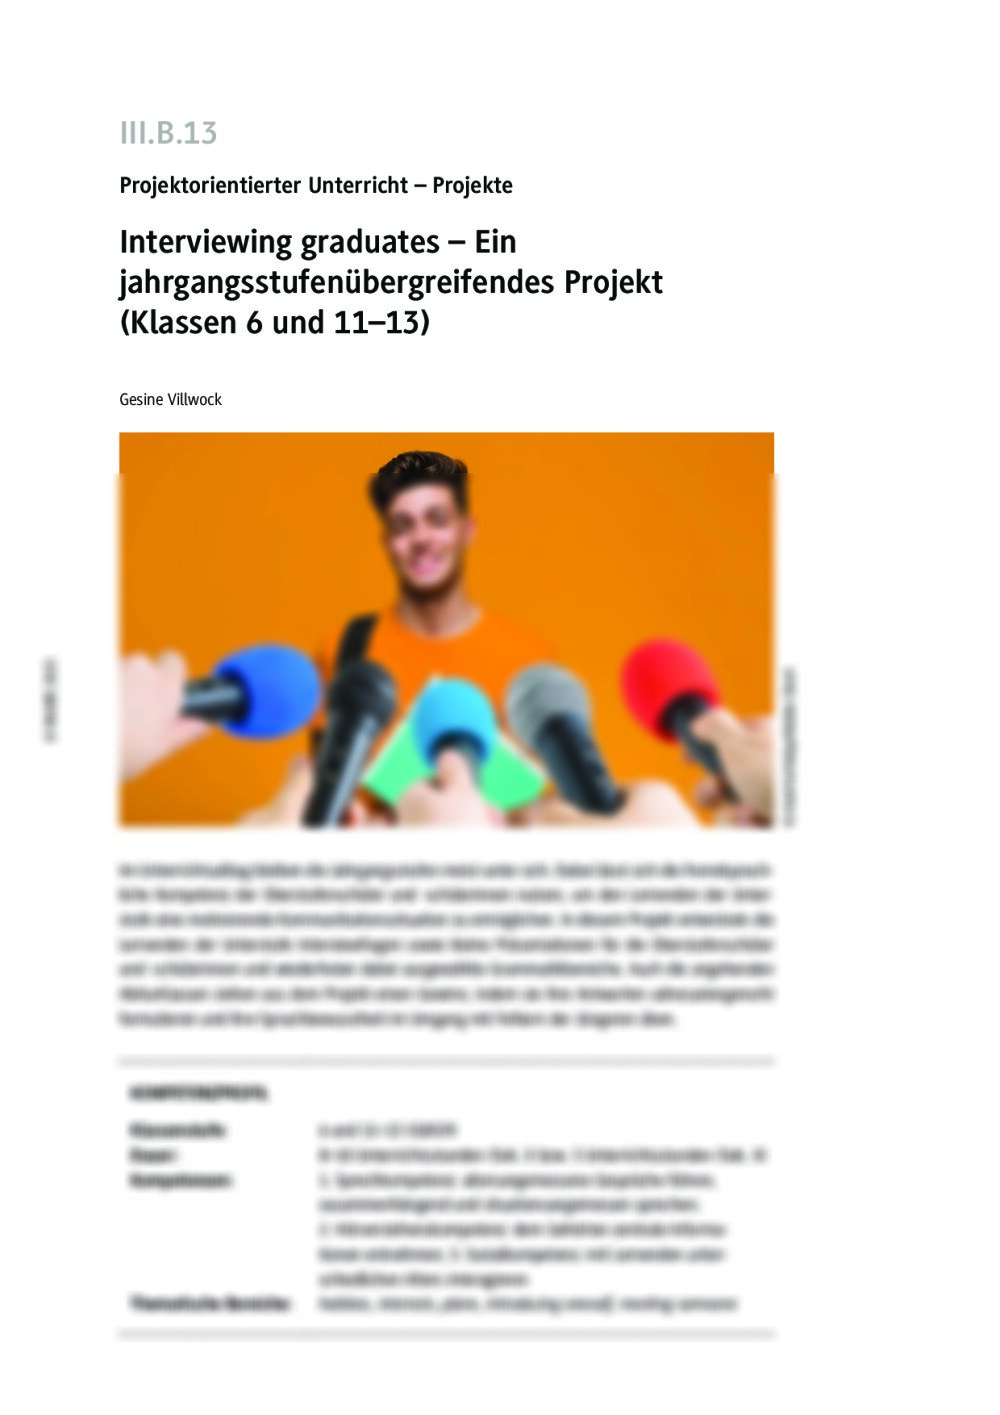 Interviewing graduates - Seite 1